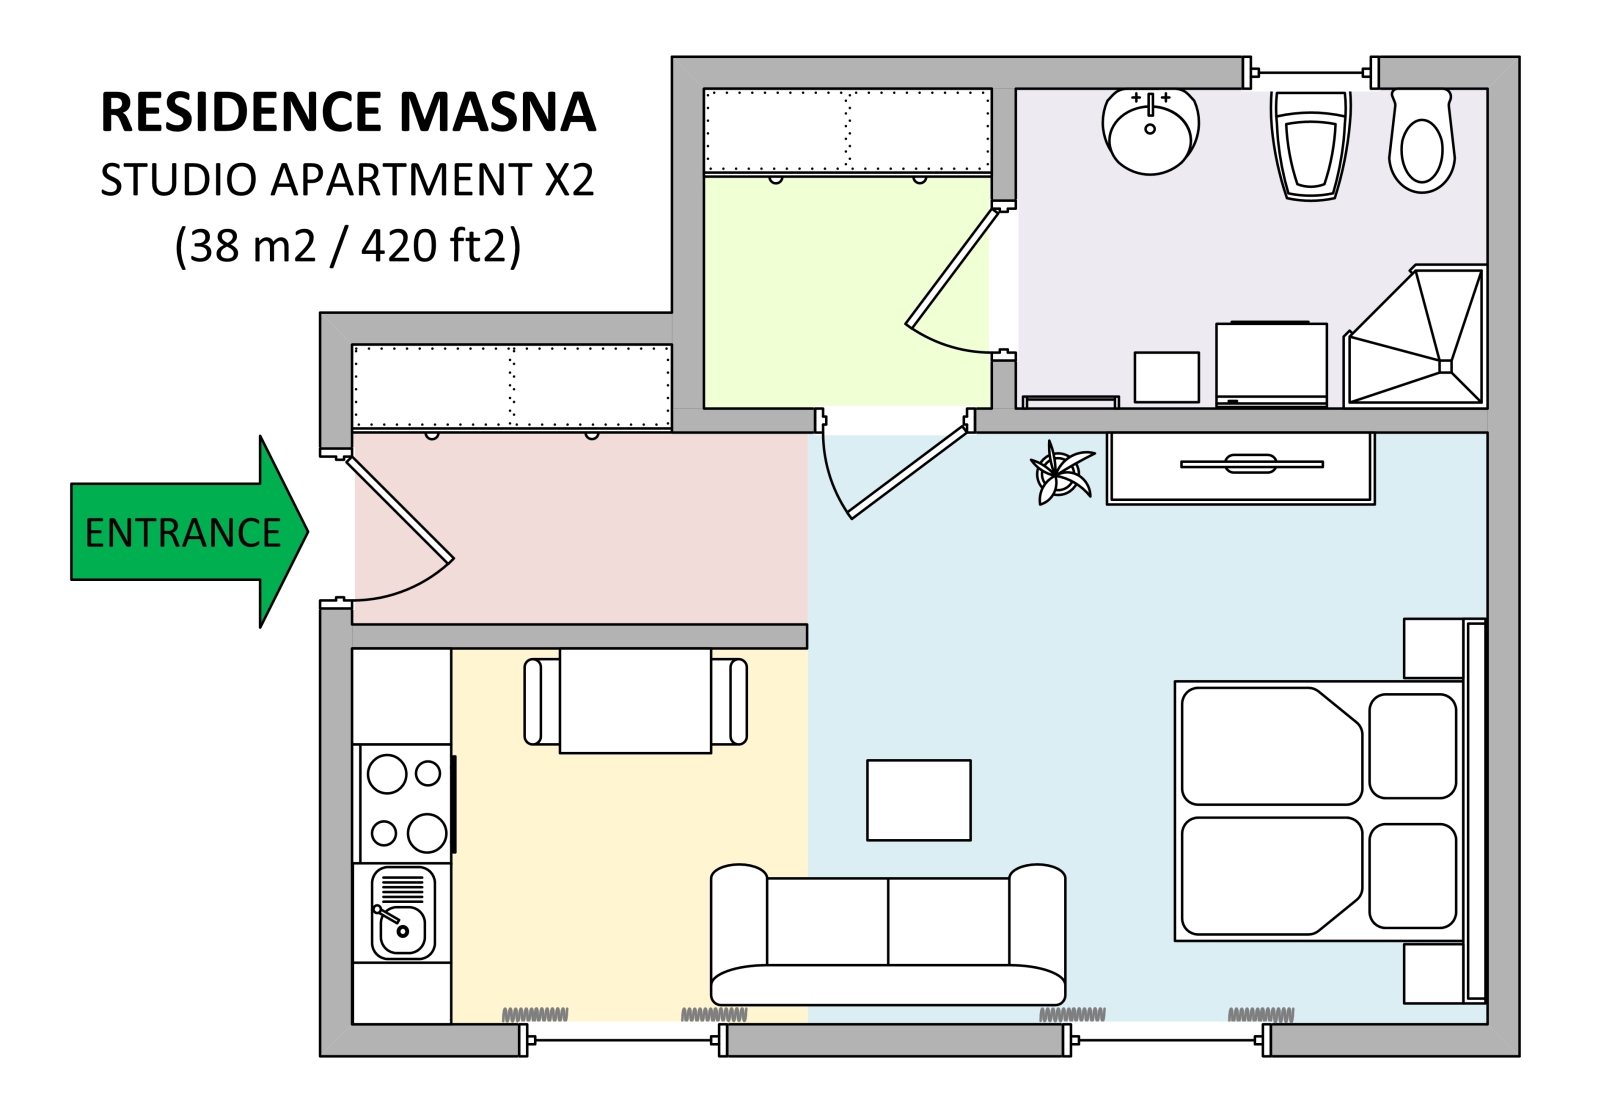 Floorplan of apartment x2 in Residence Masna in Prague